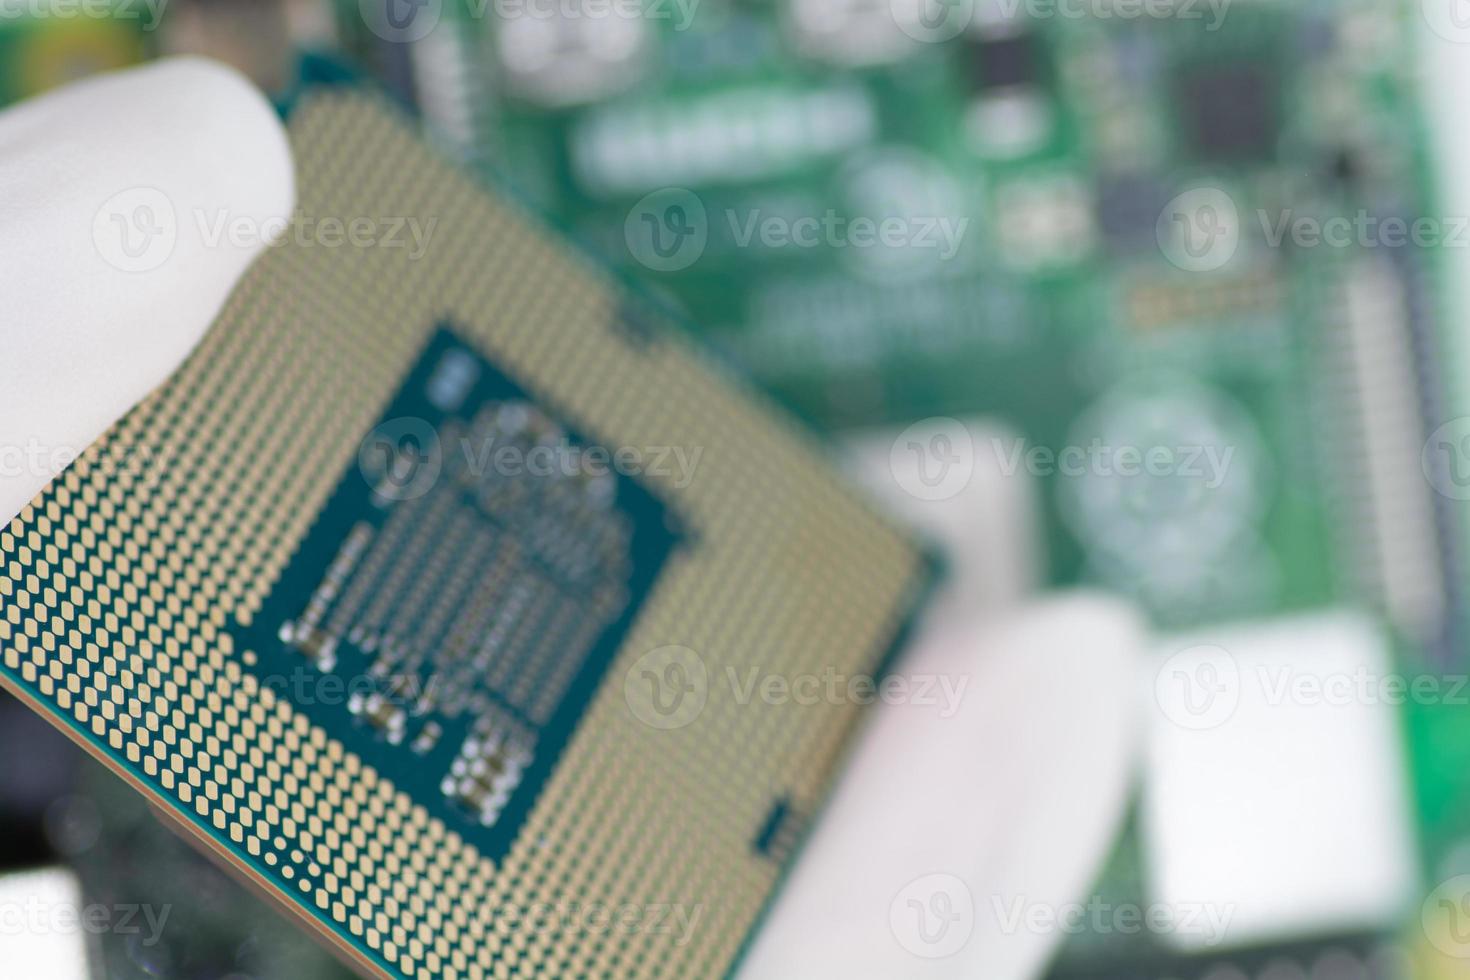 micro chip, halfgeleiders technologie van Taiwan foto